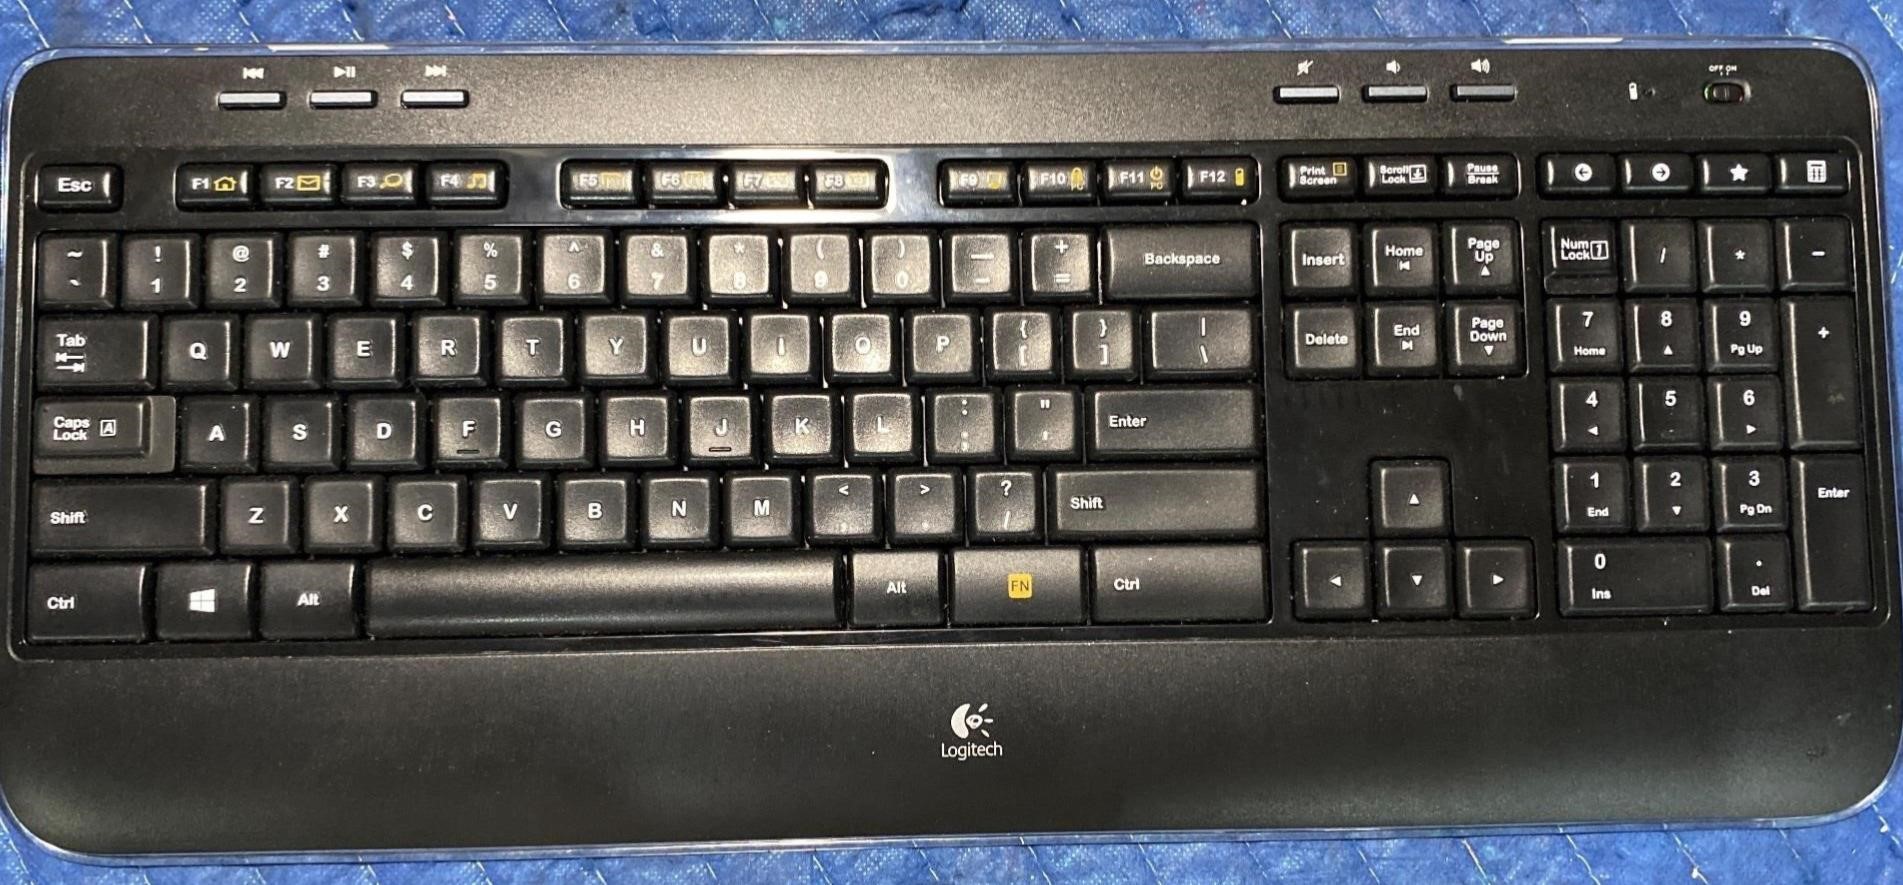 Logitech Cordless Keyboard Advanced MK540